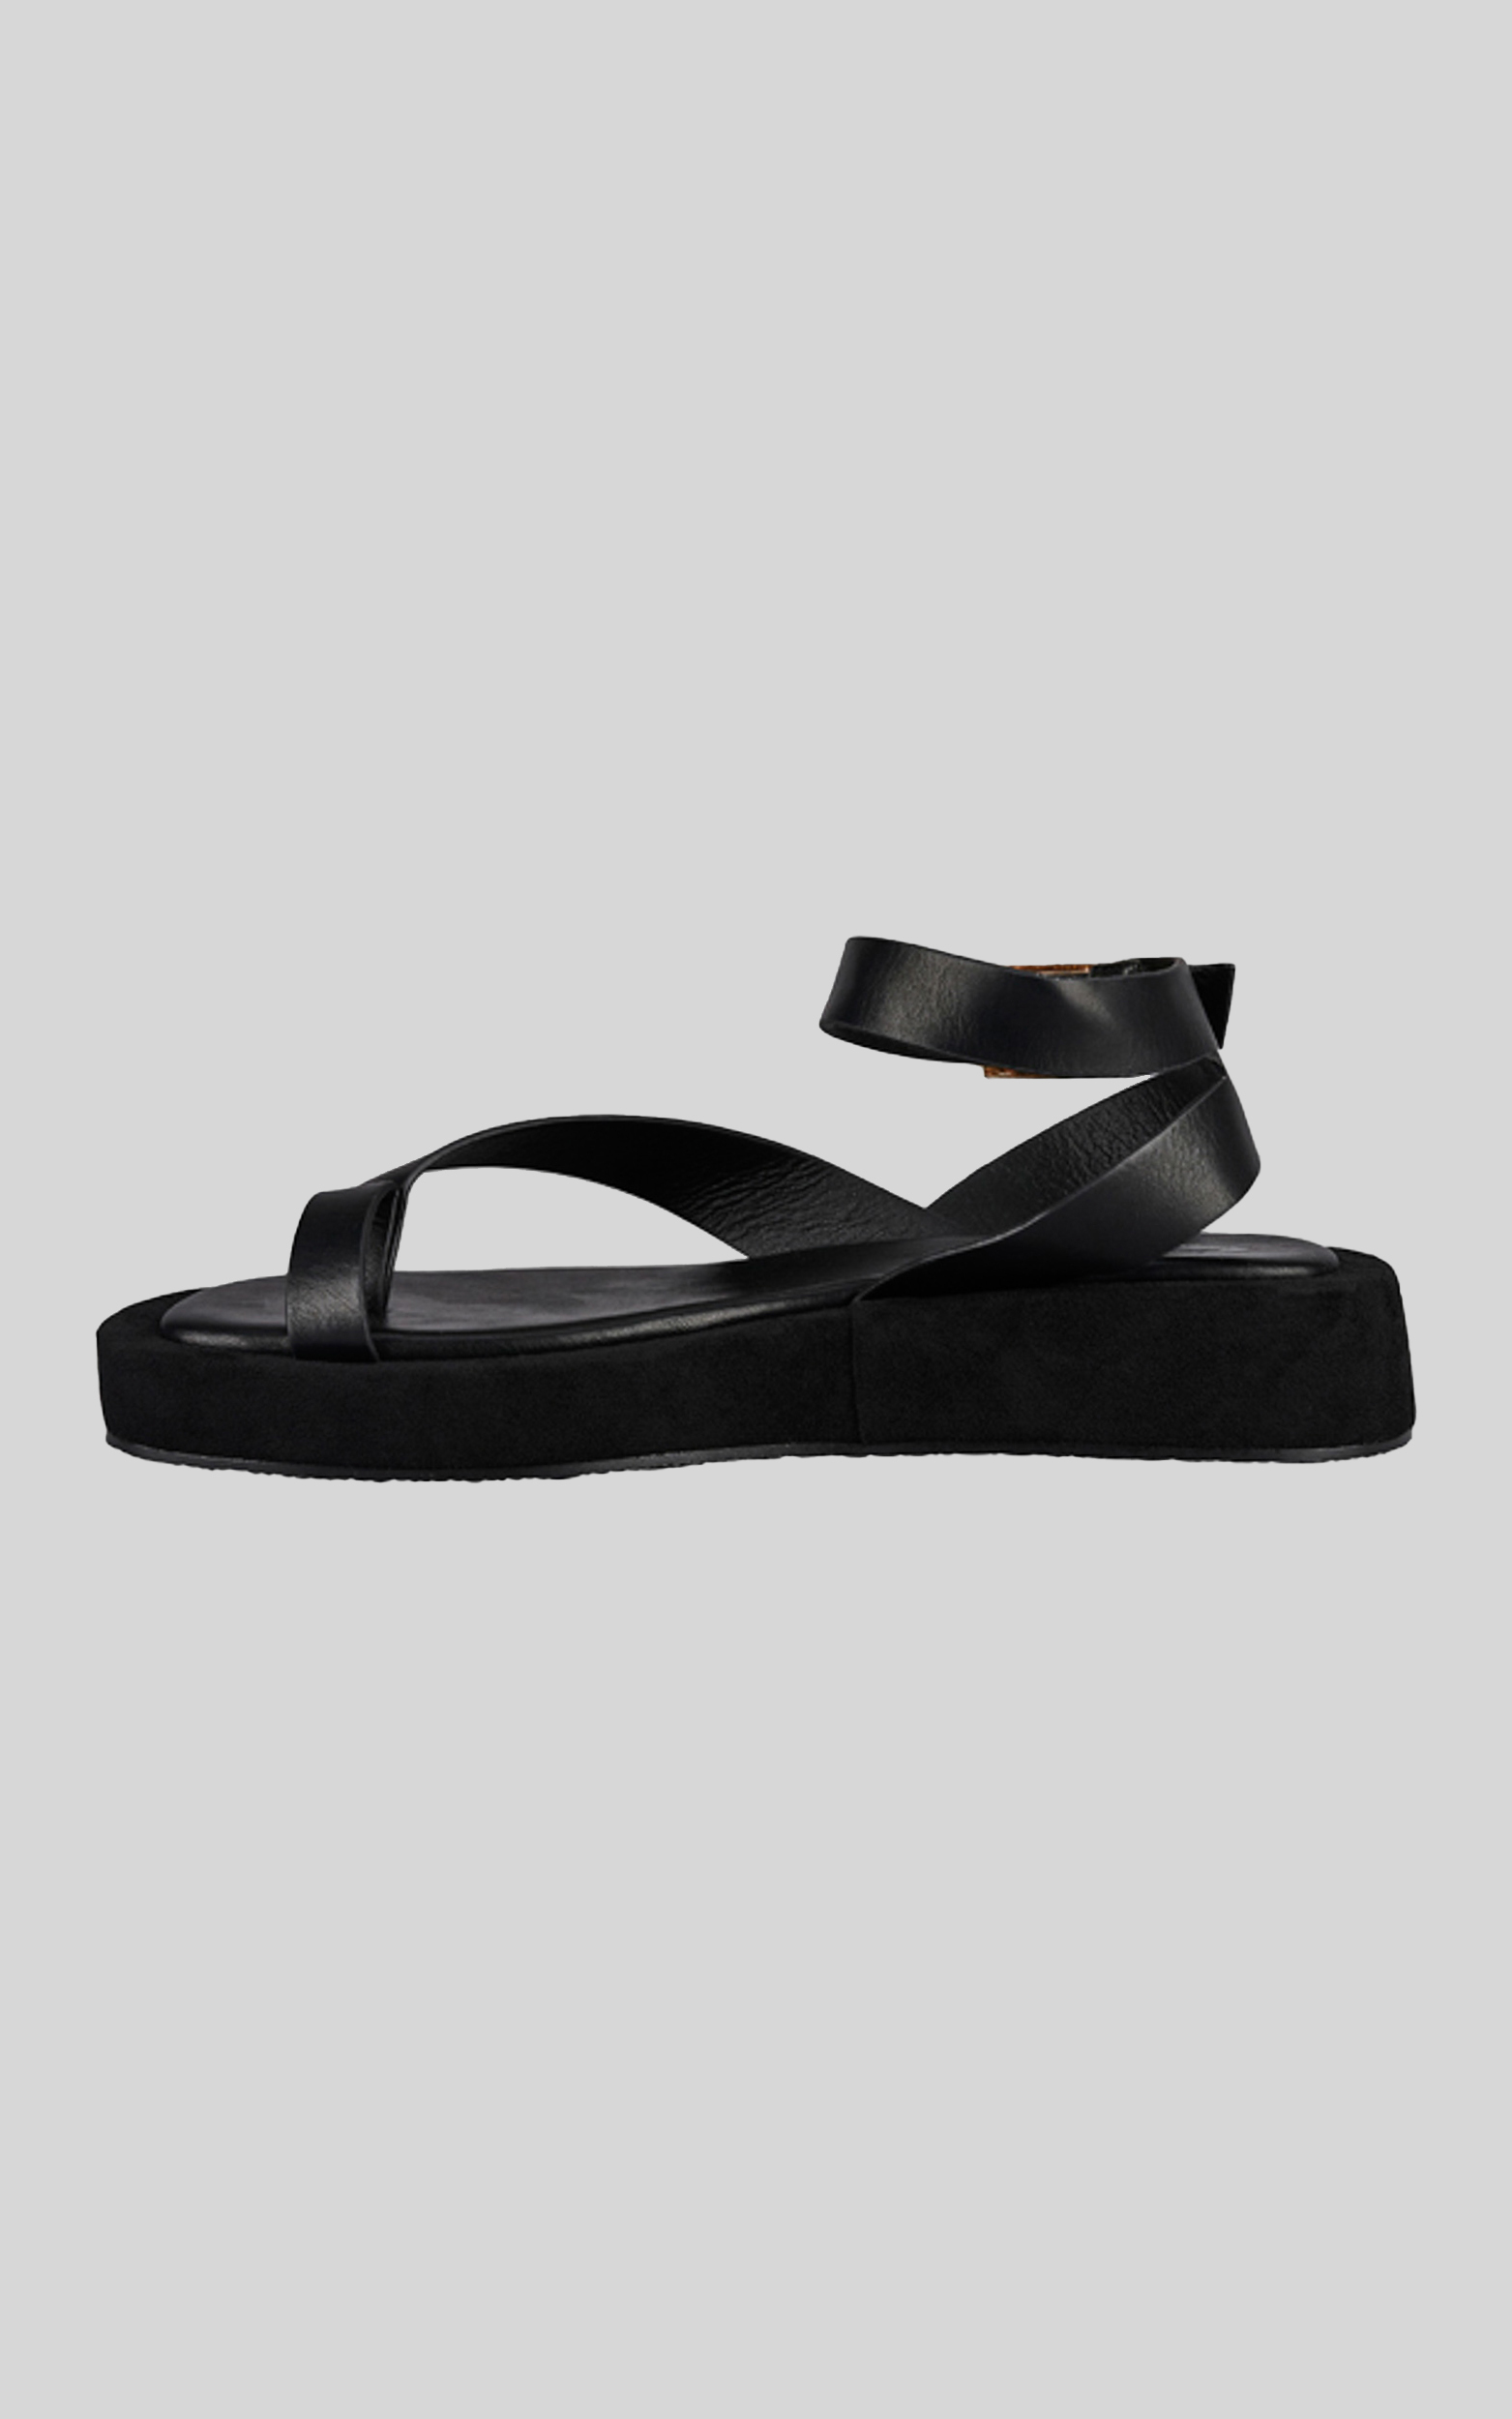 St Sana - Zelda Flatform Sandals in Black | Showpo